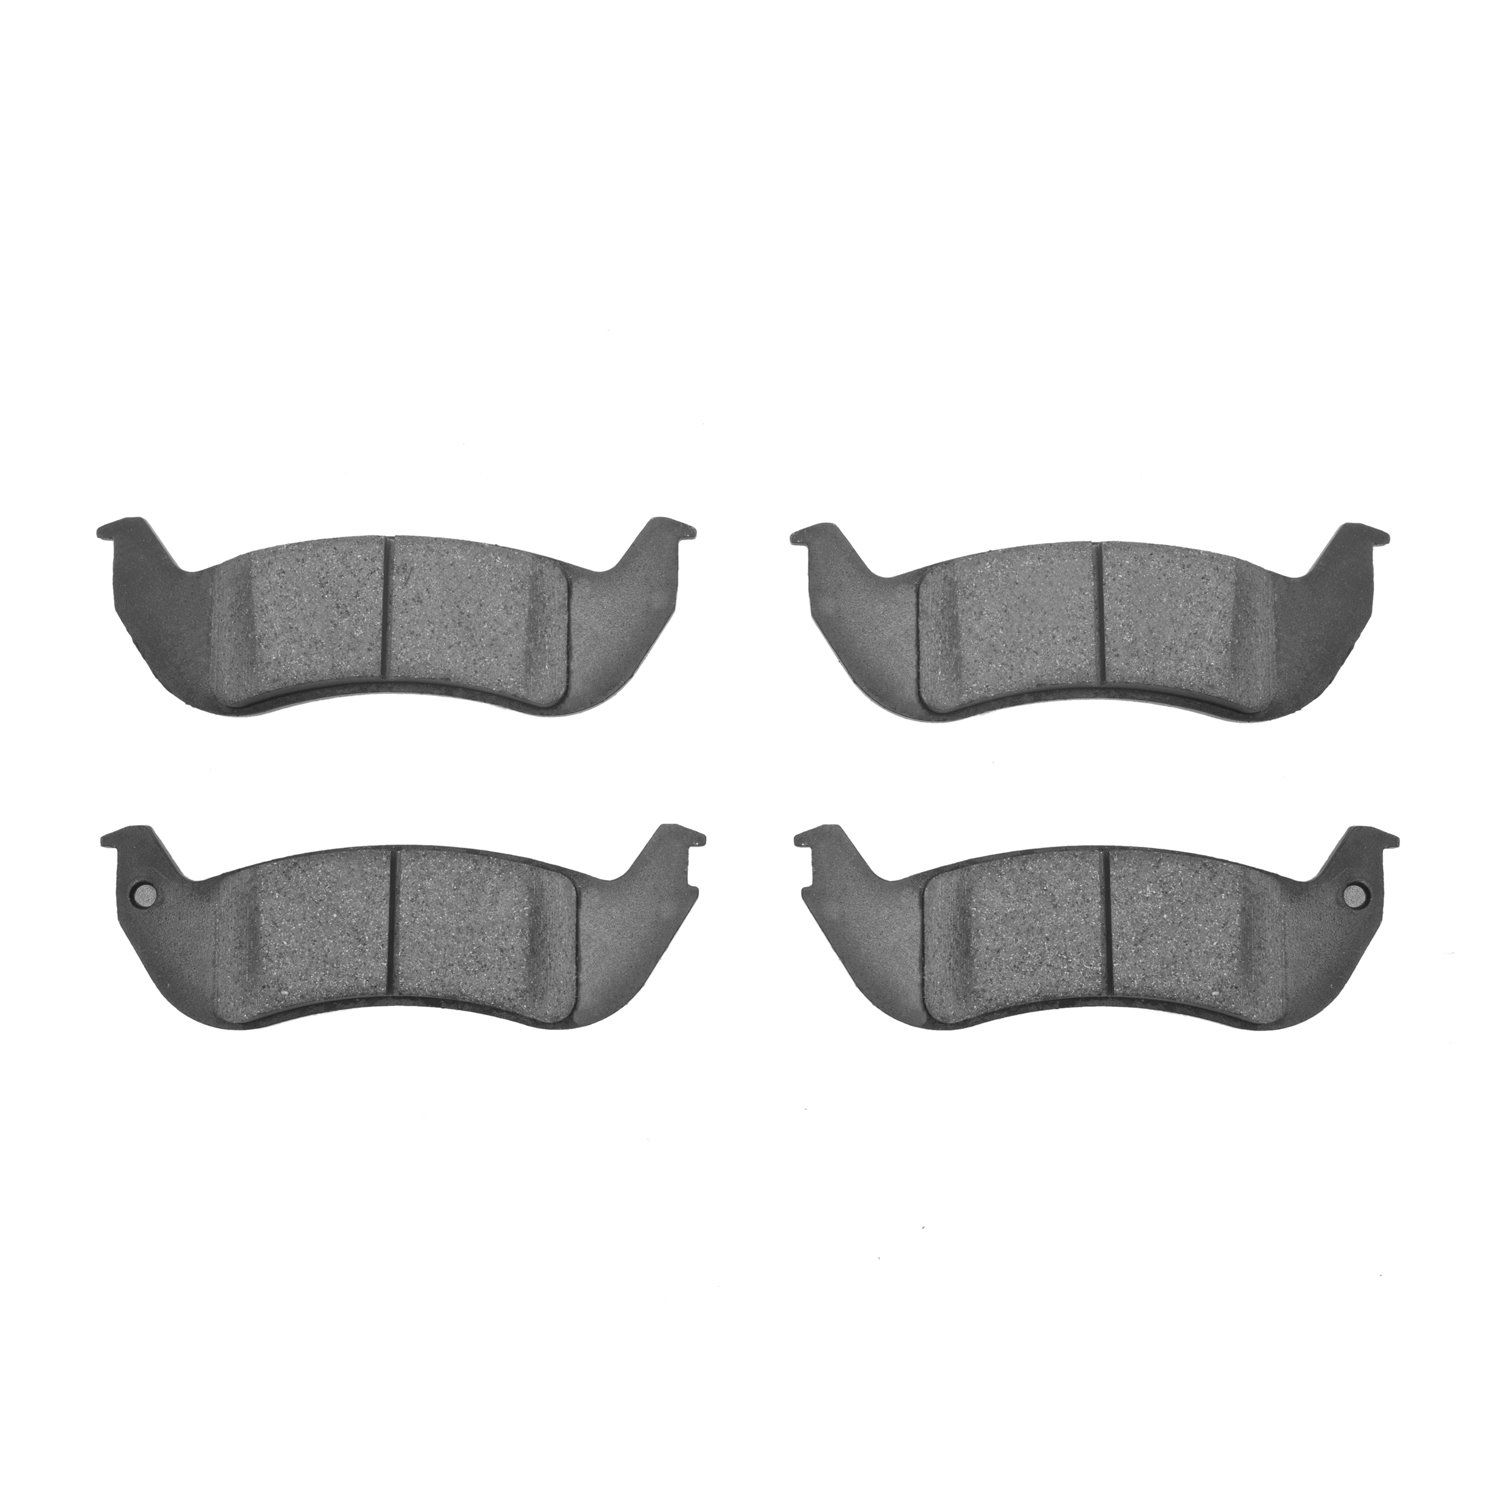 1551-0932-00 5000 Advanced Ceramic Brake Pads, 2003-2011 Ford/Lincoln/Mercury/Mazda, Position: Rear